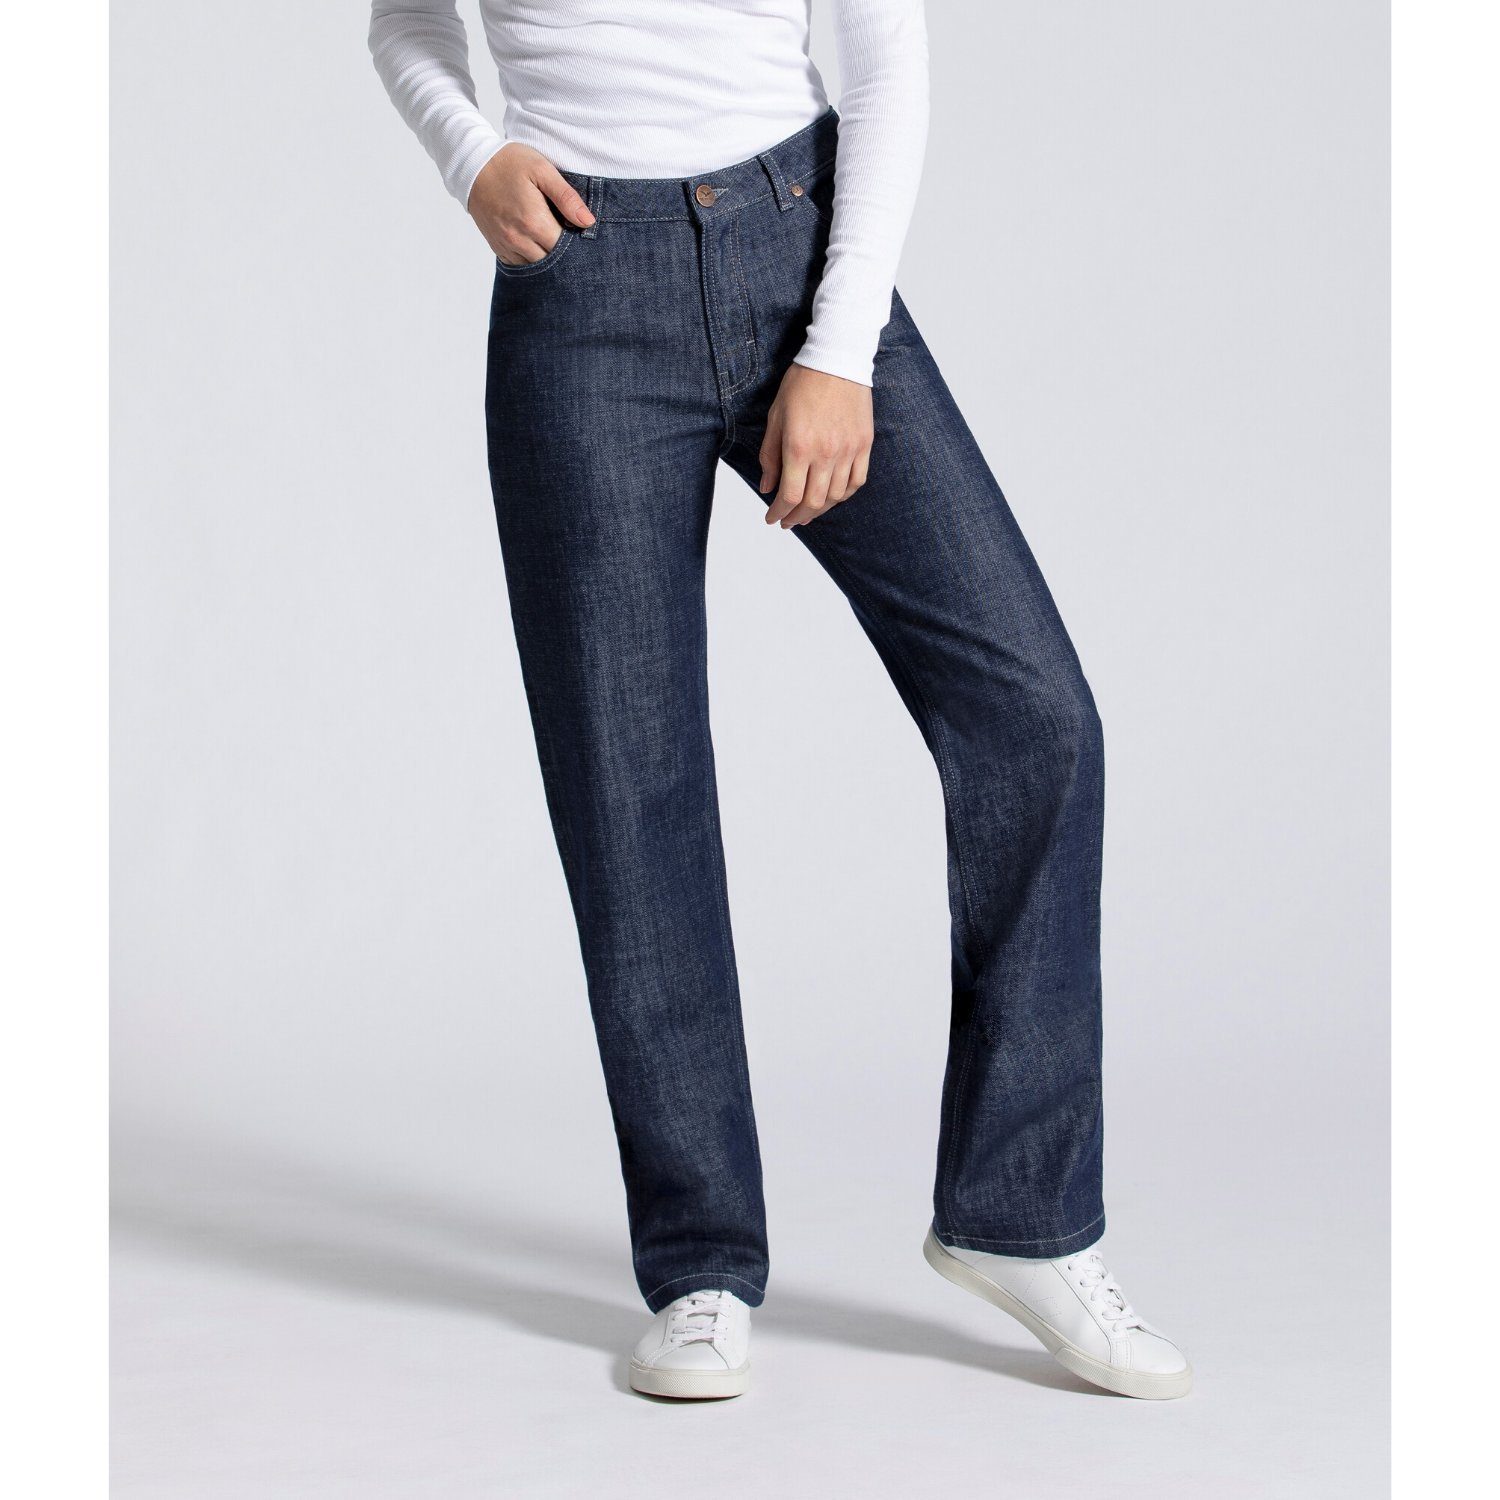 Feuervogl High-waist-Jeans fv-Fin:na, Straight Cut, High Waist, Damenjeans 5-Pocket-Style, High Waist, Straight Cut Classic Blue